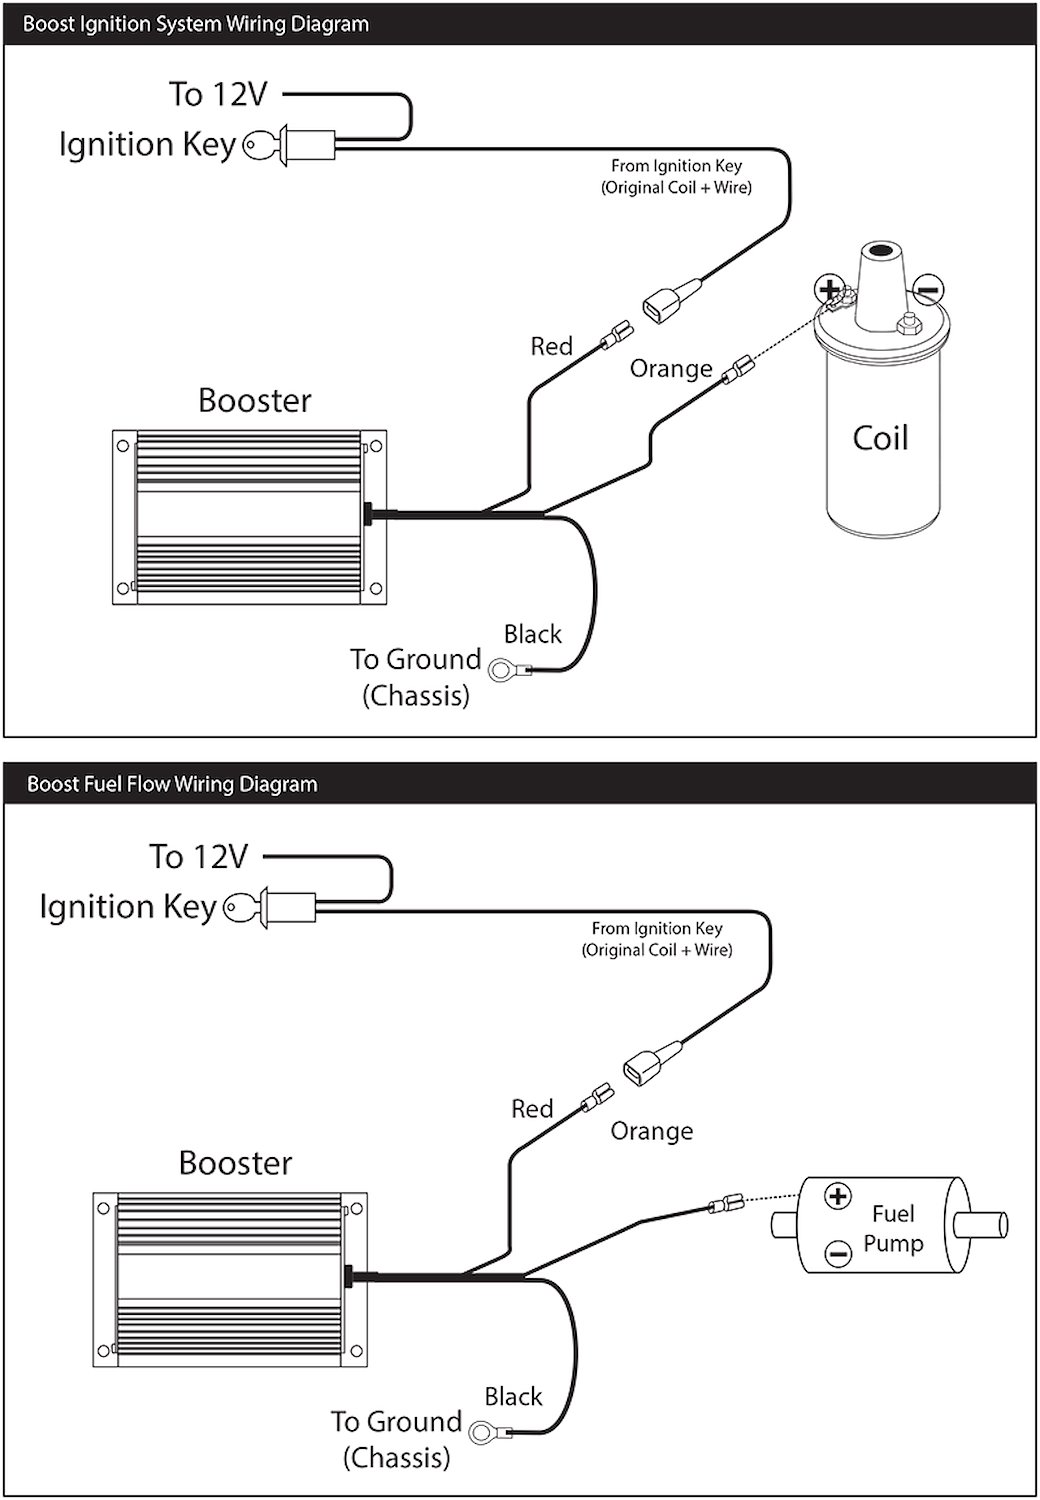 Ignition / Fuel Pump Voltage Booster 16volt